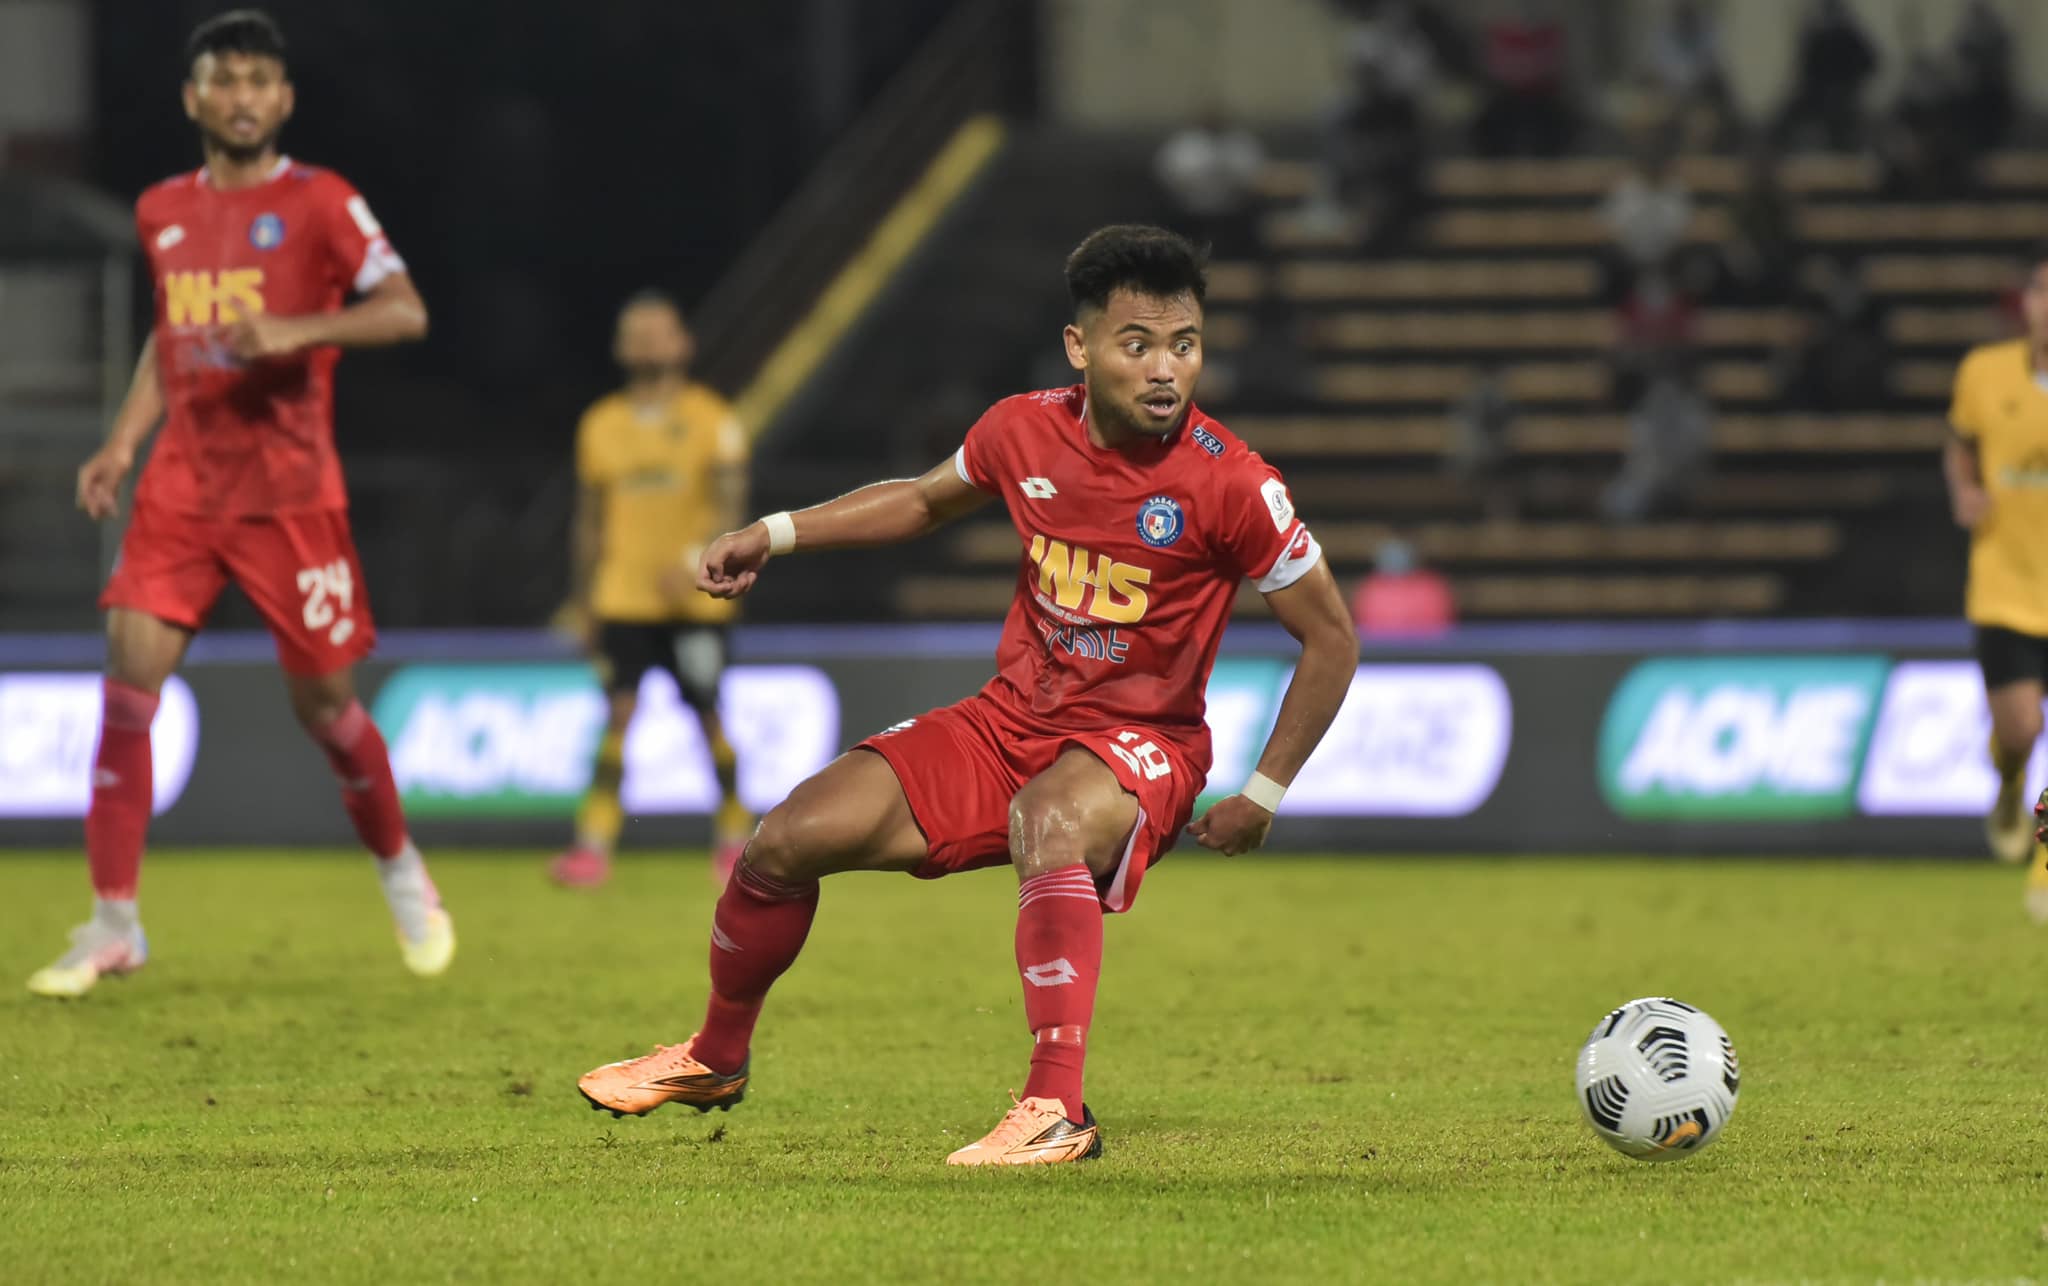 Saddil Ramdani dan Kolega Tumbang di Kandang, Pelatih Sabah FC Ungkap Penyebabnya